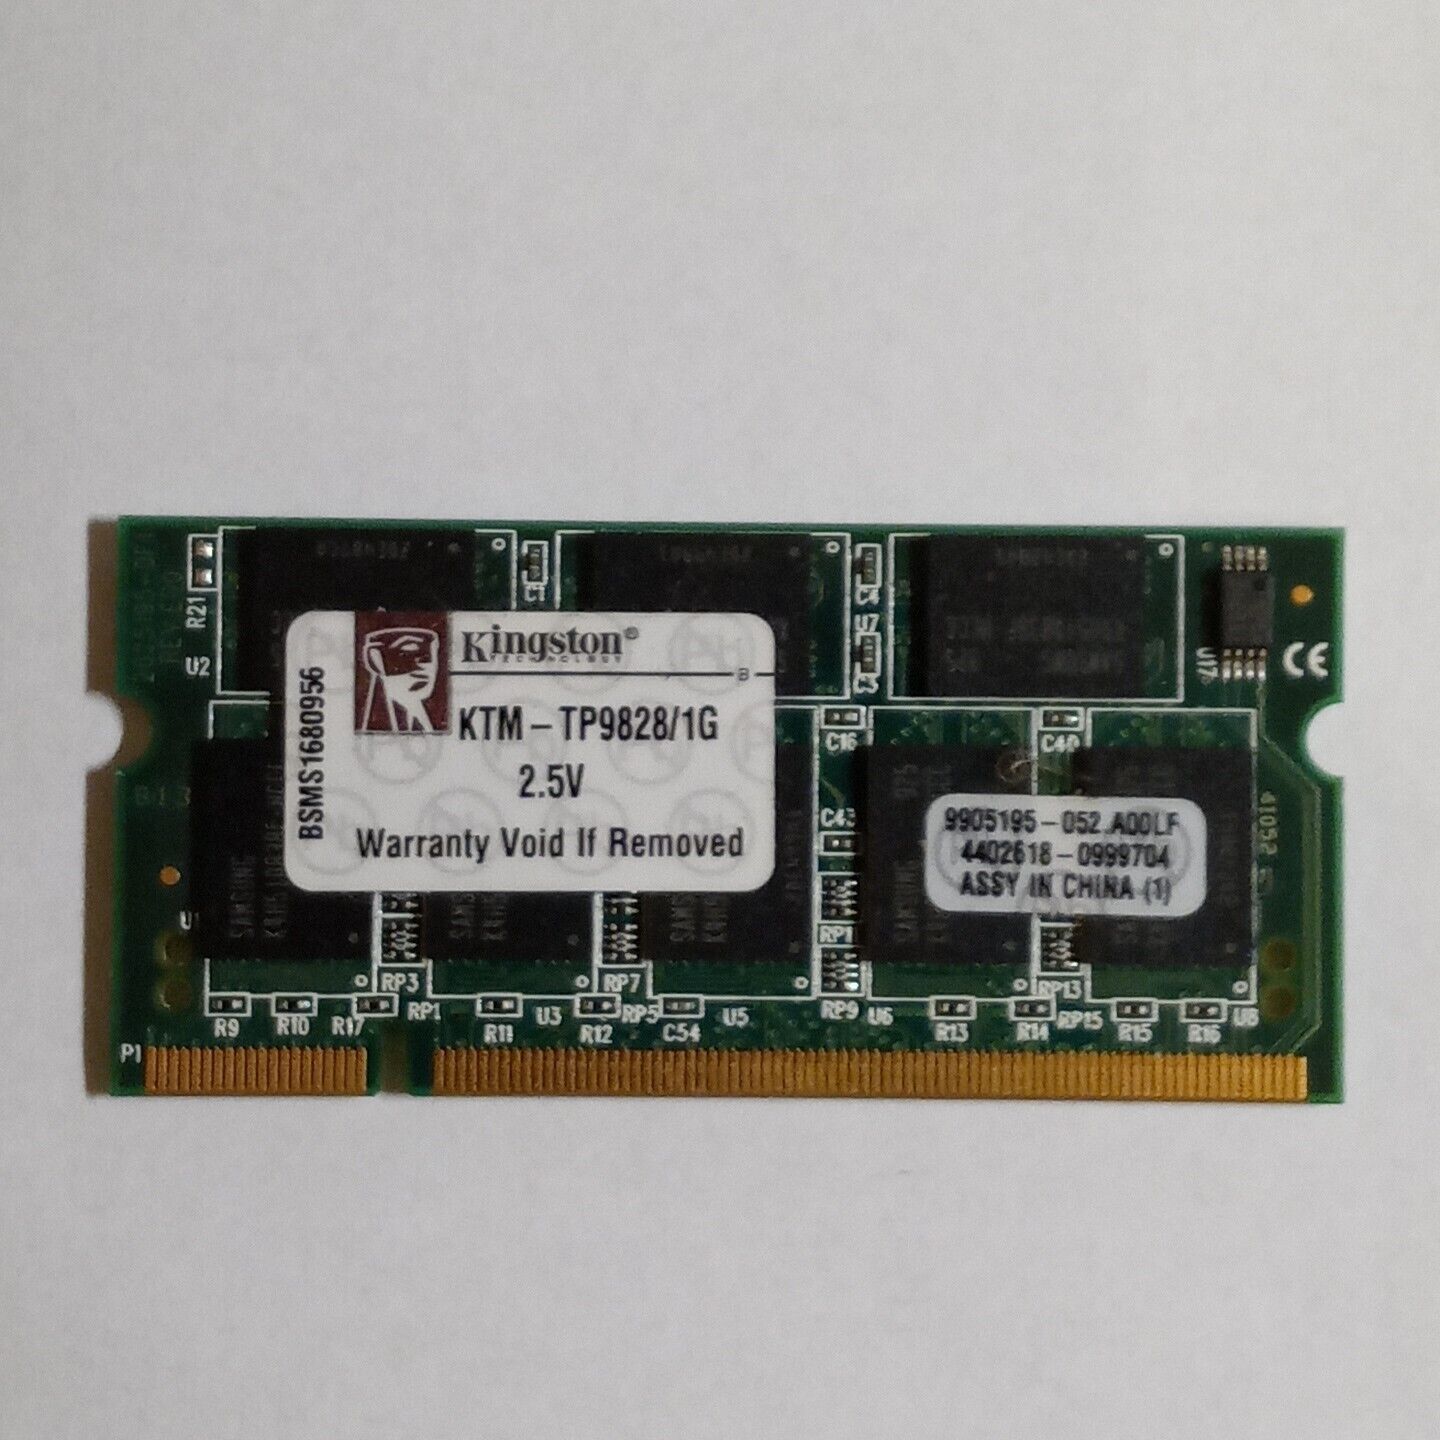 Kingston 1GB PC-2700S DDR-333  LAPTOP Ram Memory Stick SODIMM DDR1